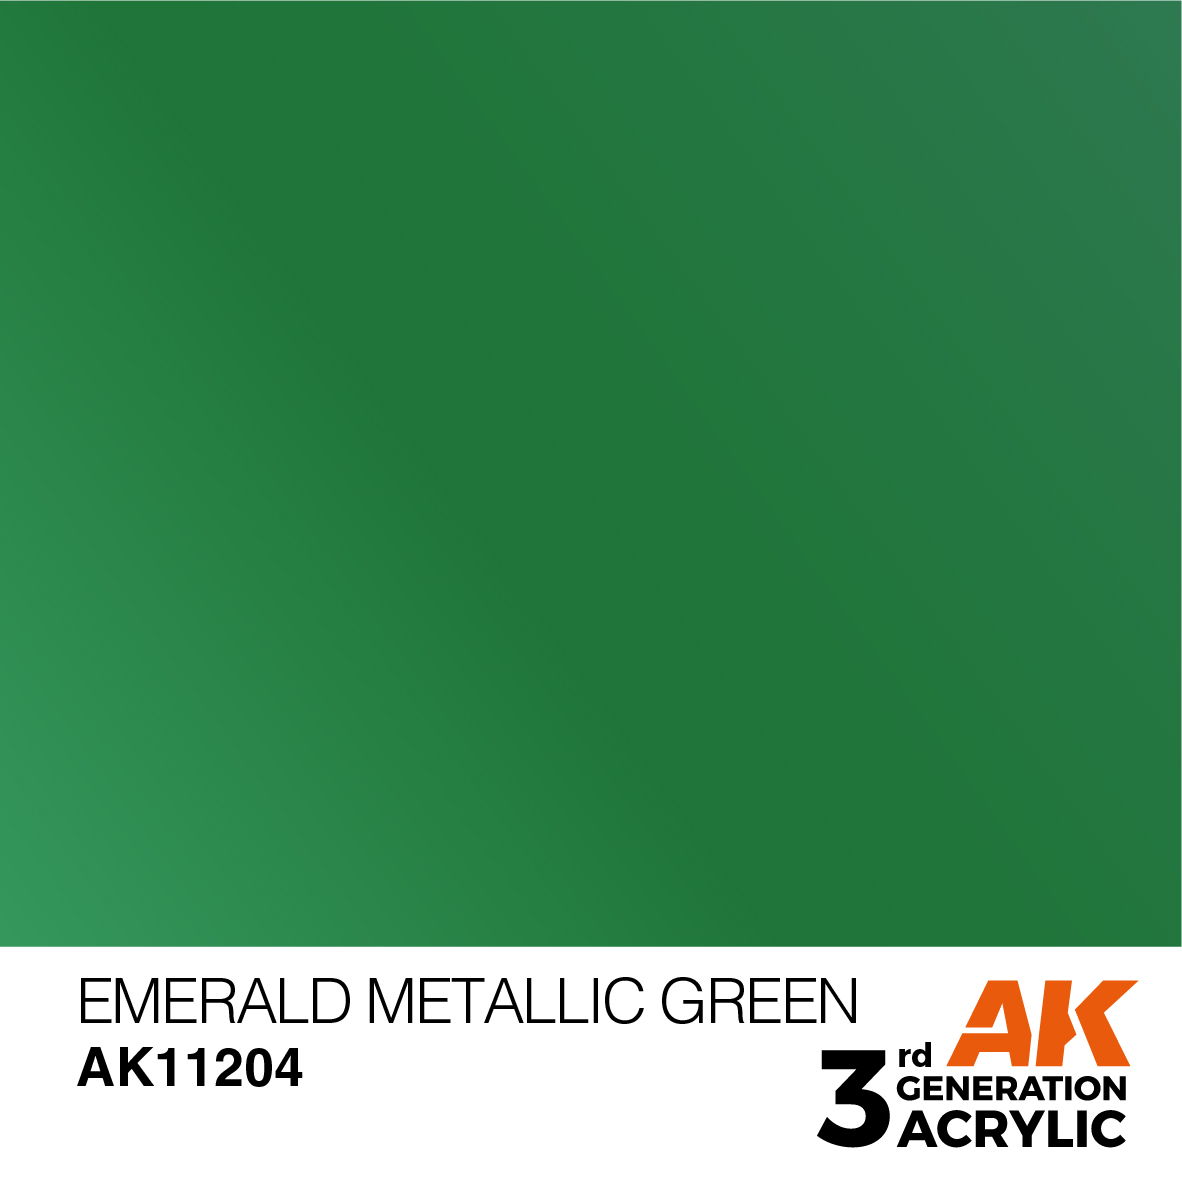 EMERALD METALLIC GREEN – METALLIC